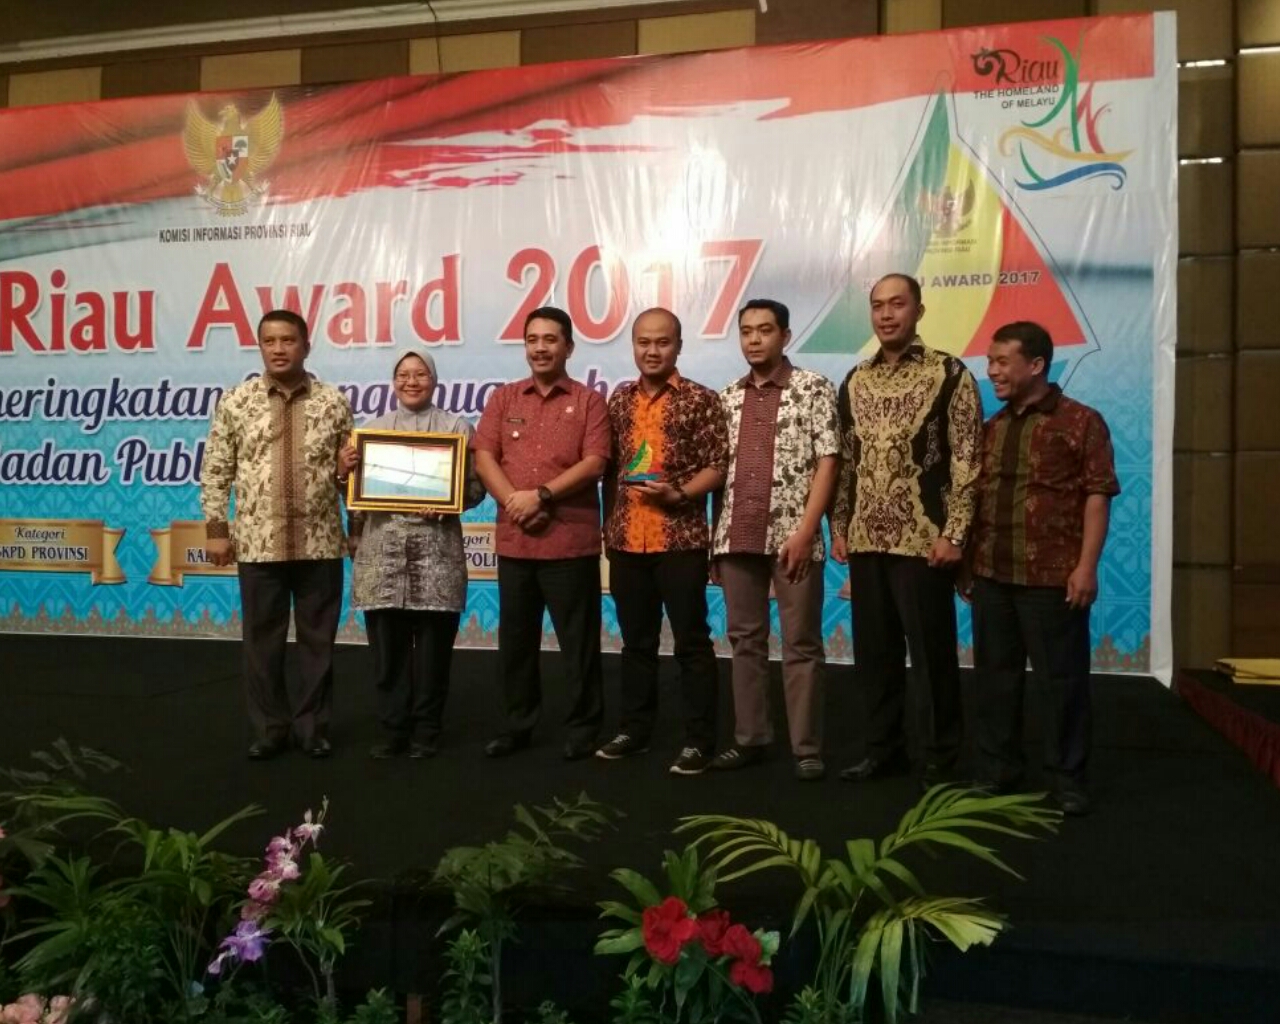 Luar Biasa, Dipimpin Bupati Termuda di Riau, Kabupaten Inhu Juara 1 KI Award Riau 2017